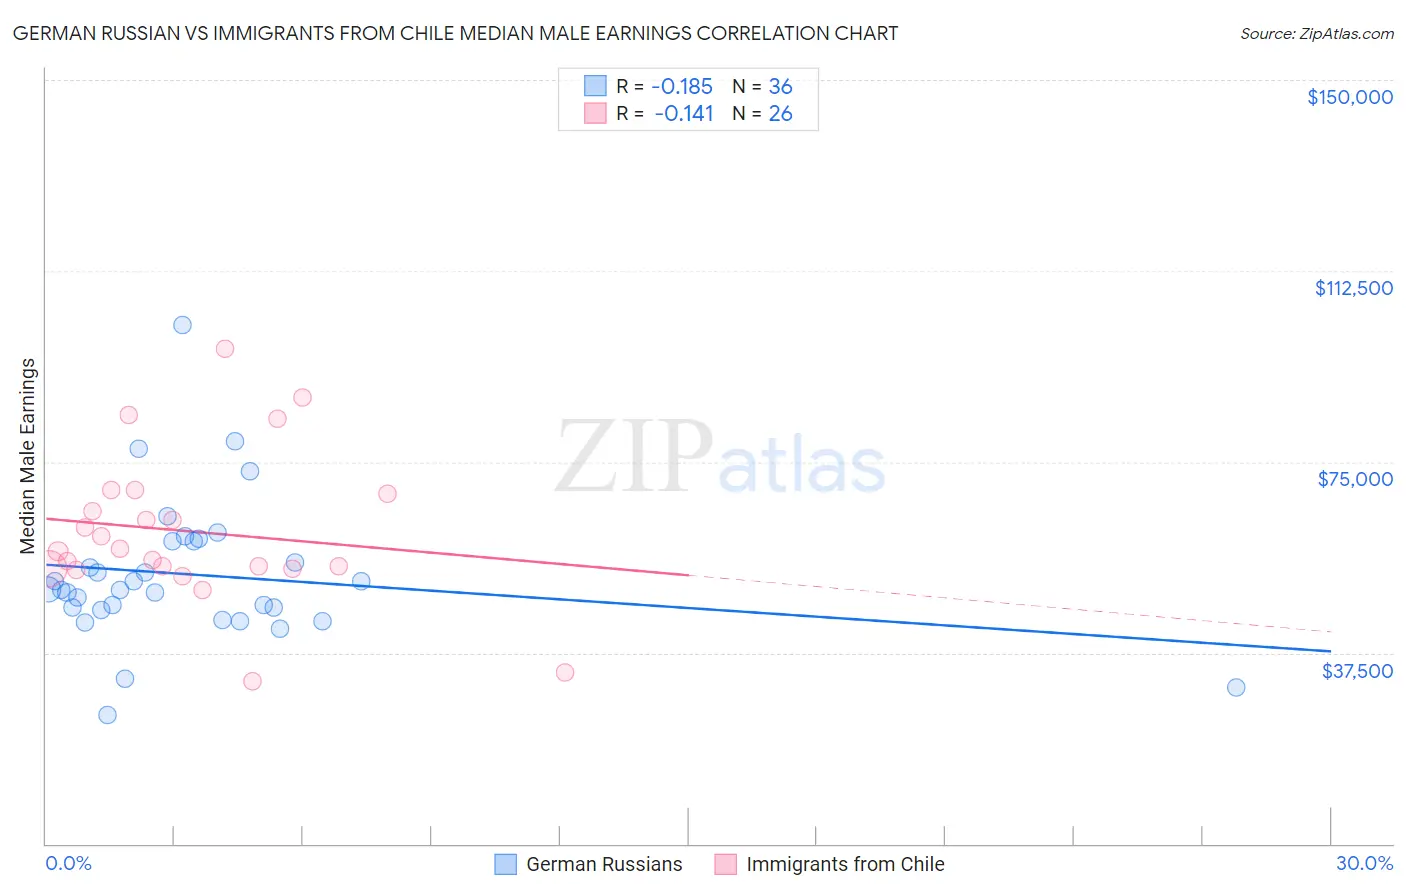 German Russian vs Immigrants from Chile Median Male Earnings